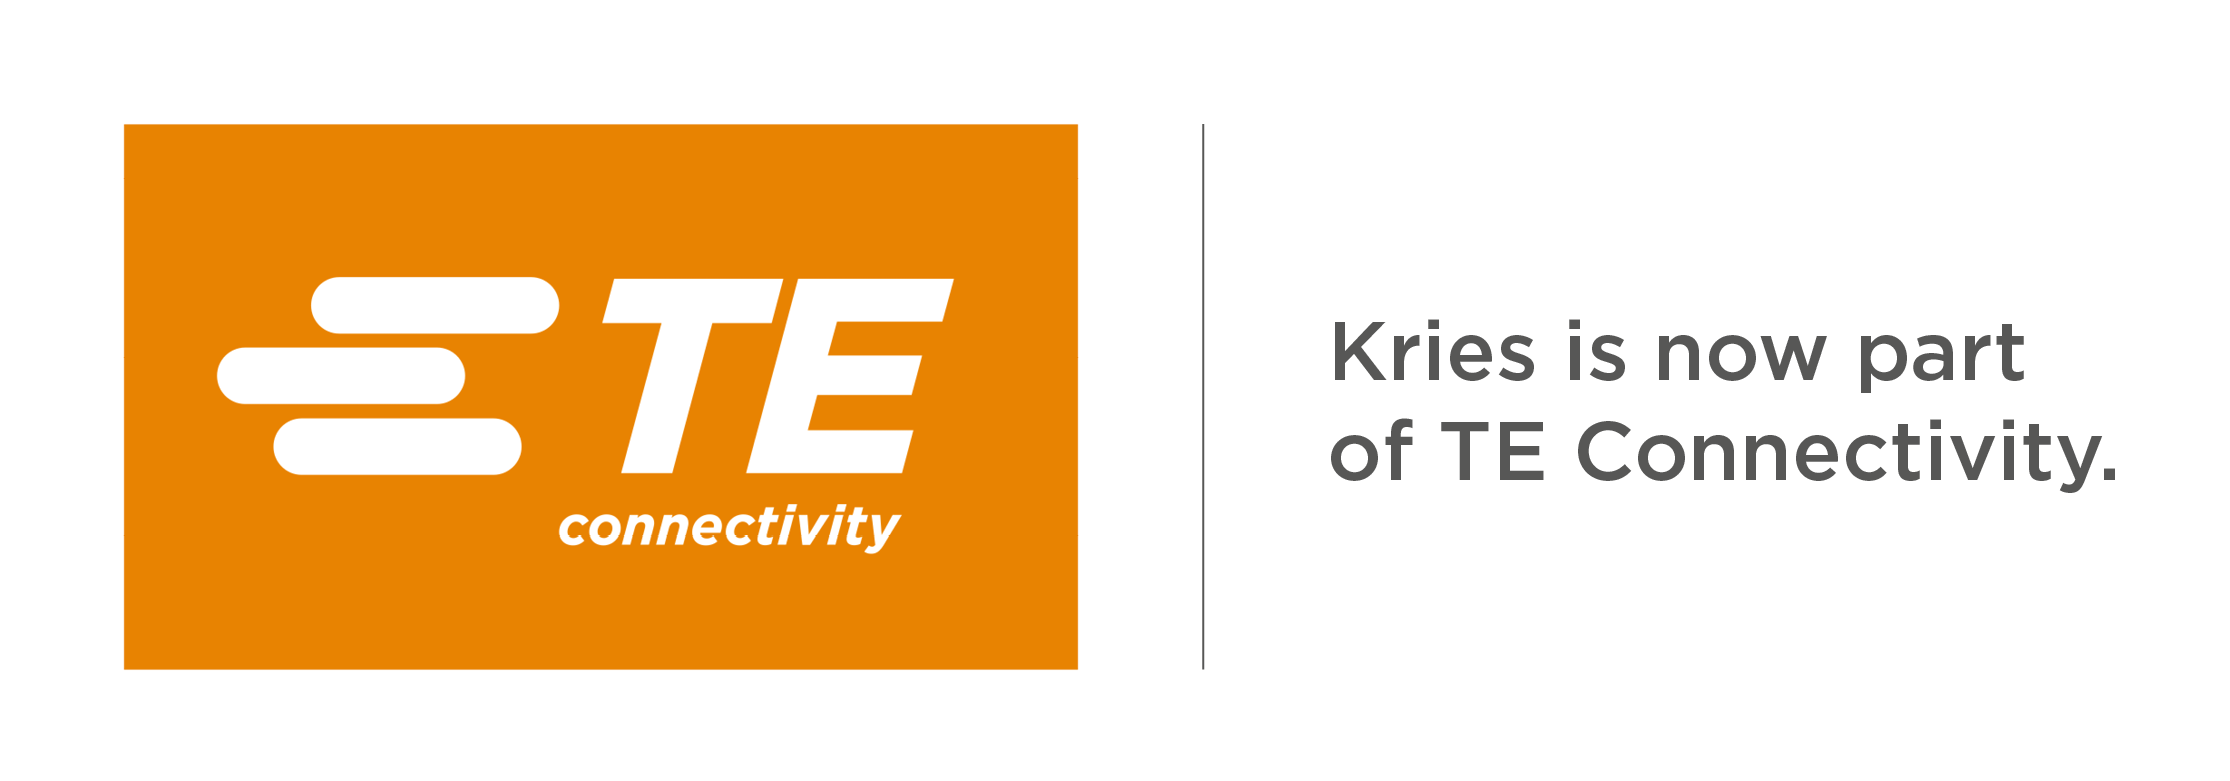 TE Connectivity acquires smart grid company Kries